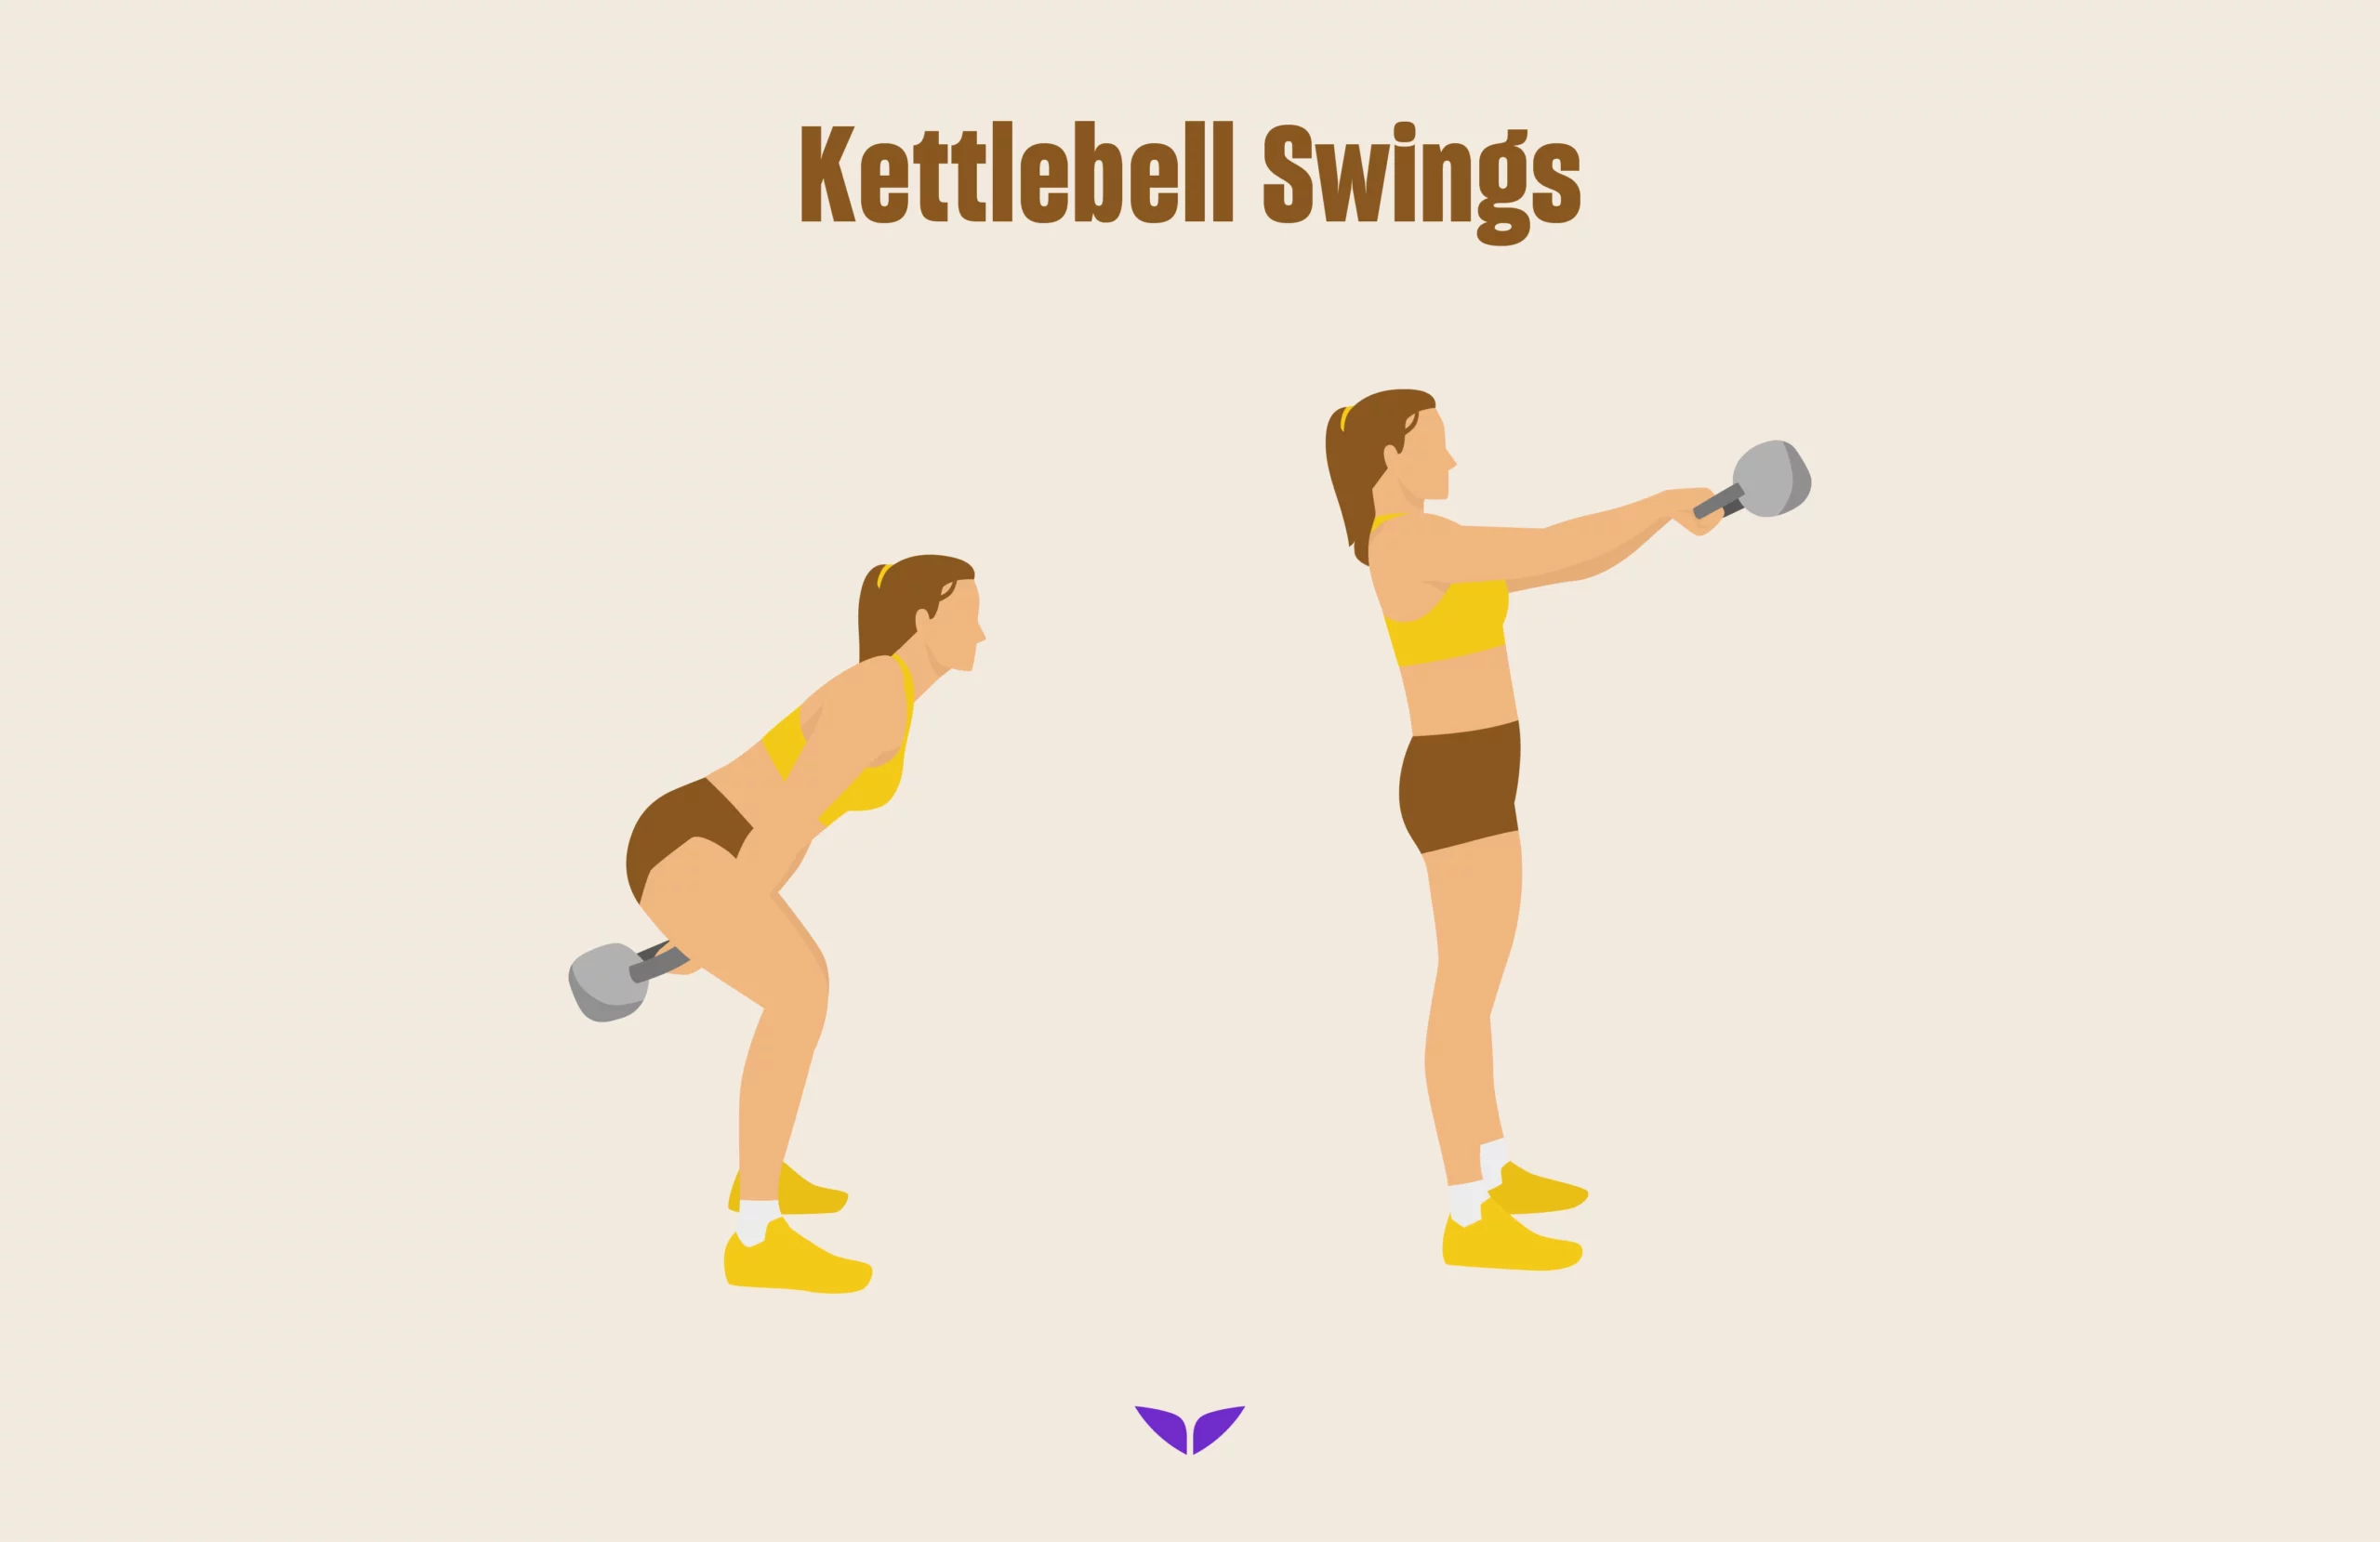 Kettlebell swings